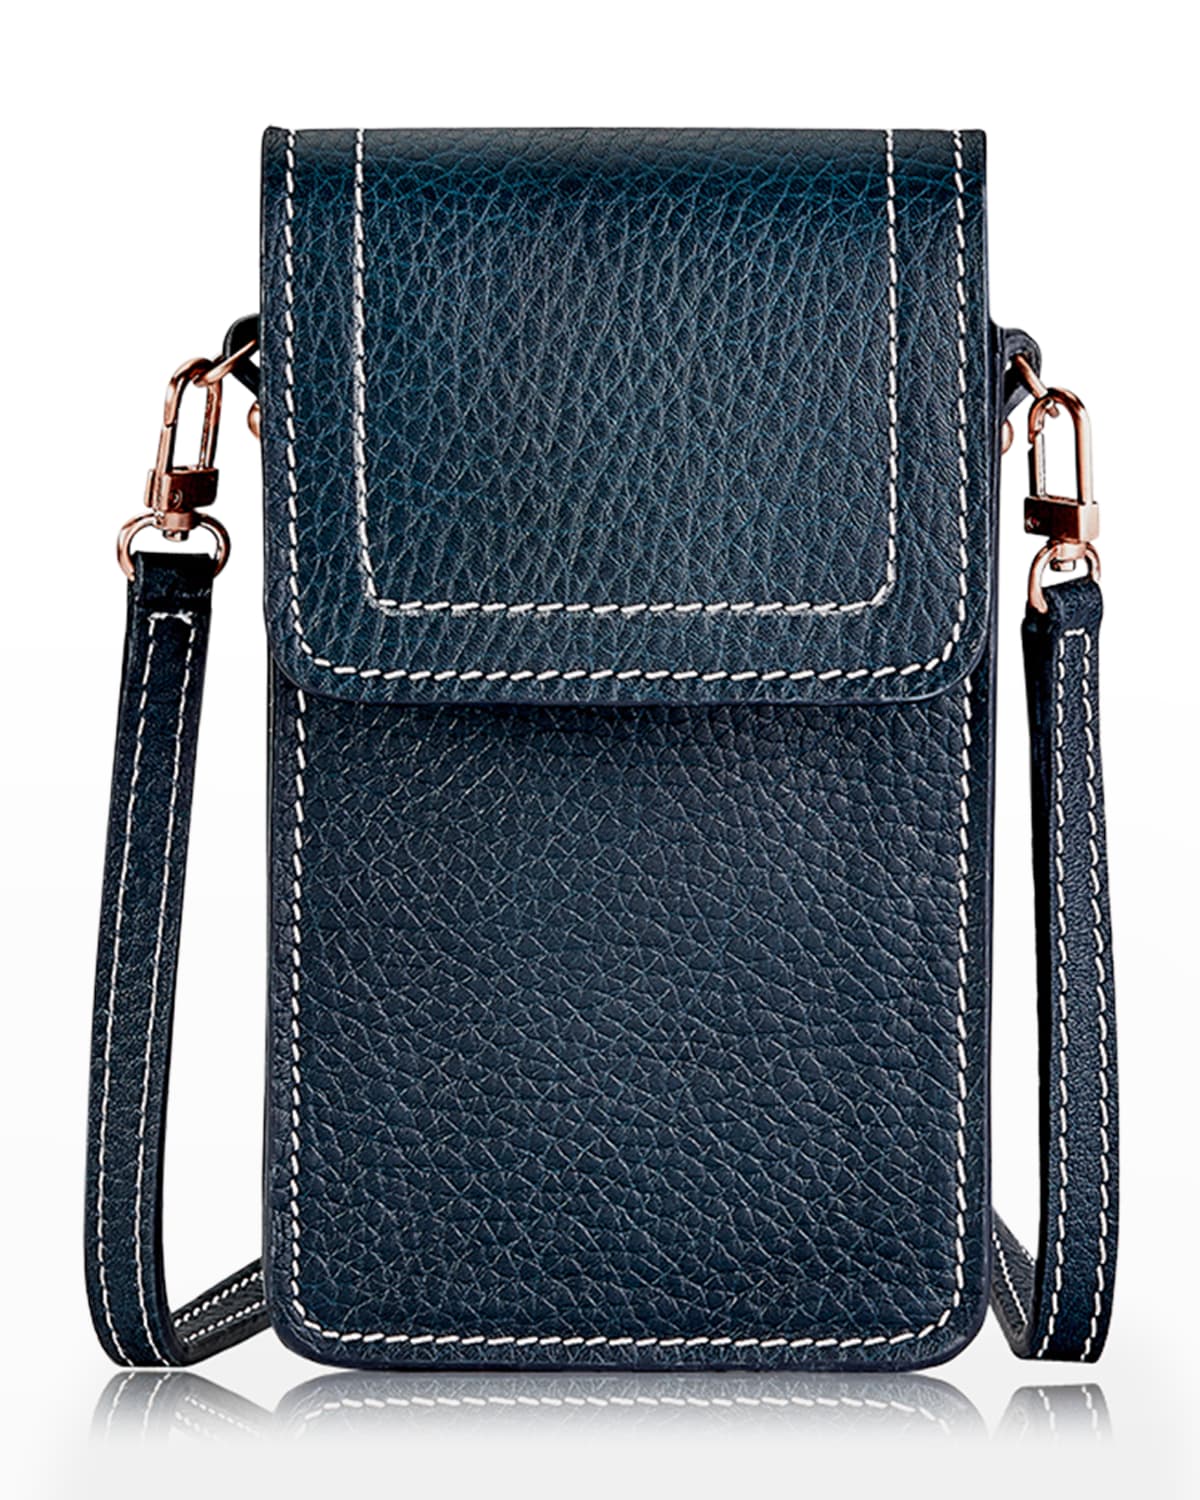 Gigi New York Liv Phone Pebble Leather Crossbody Bag